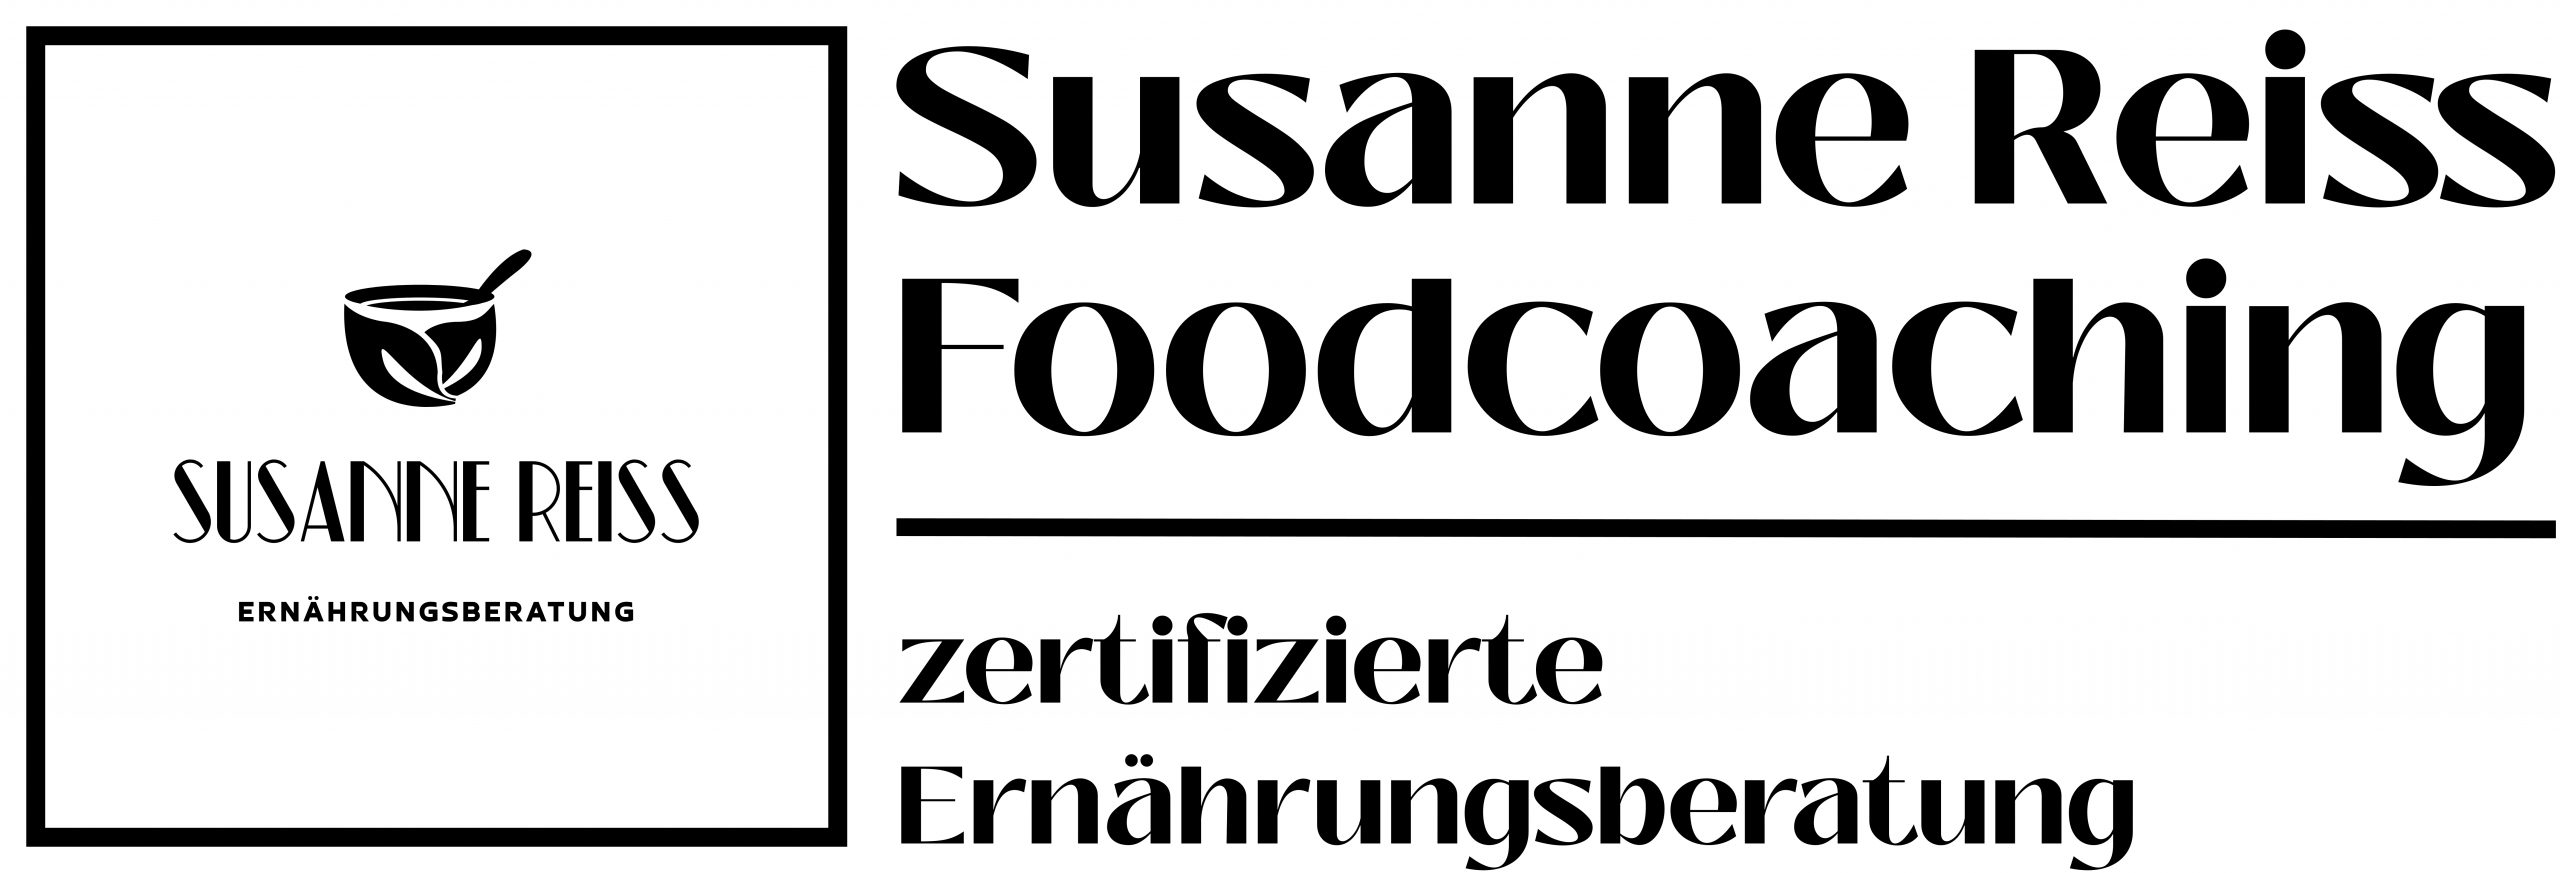 Susanne Reiss – Foodcoaching